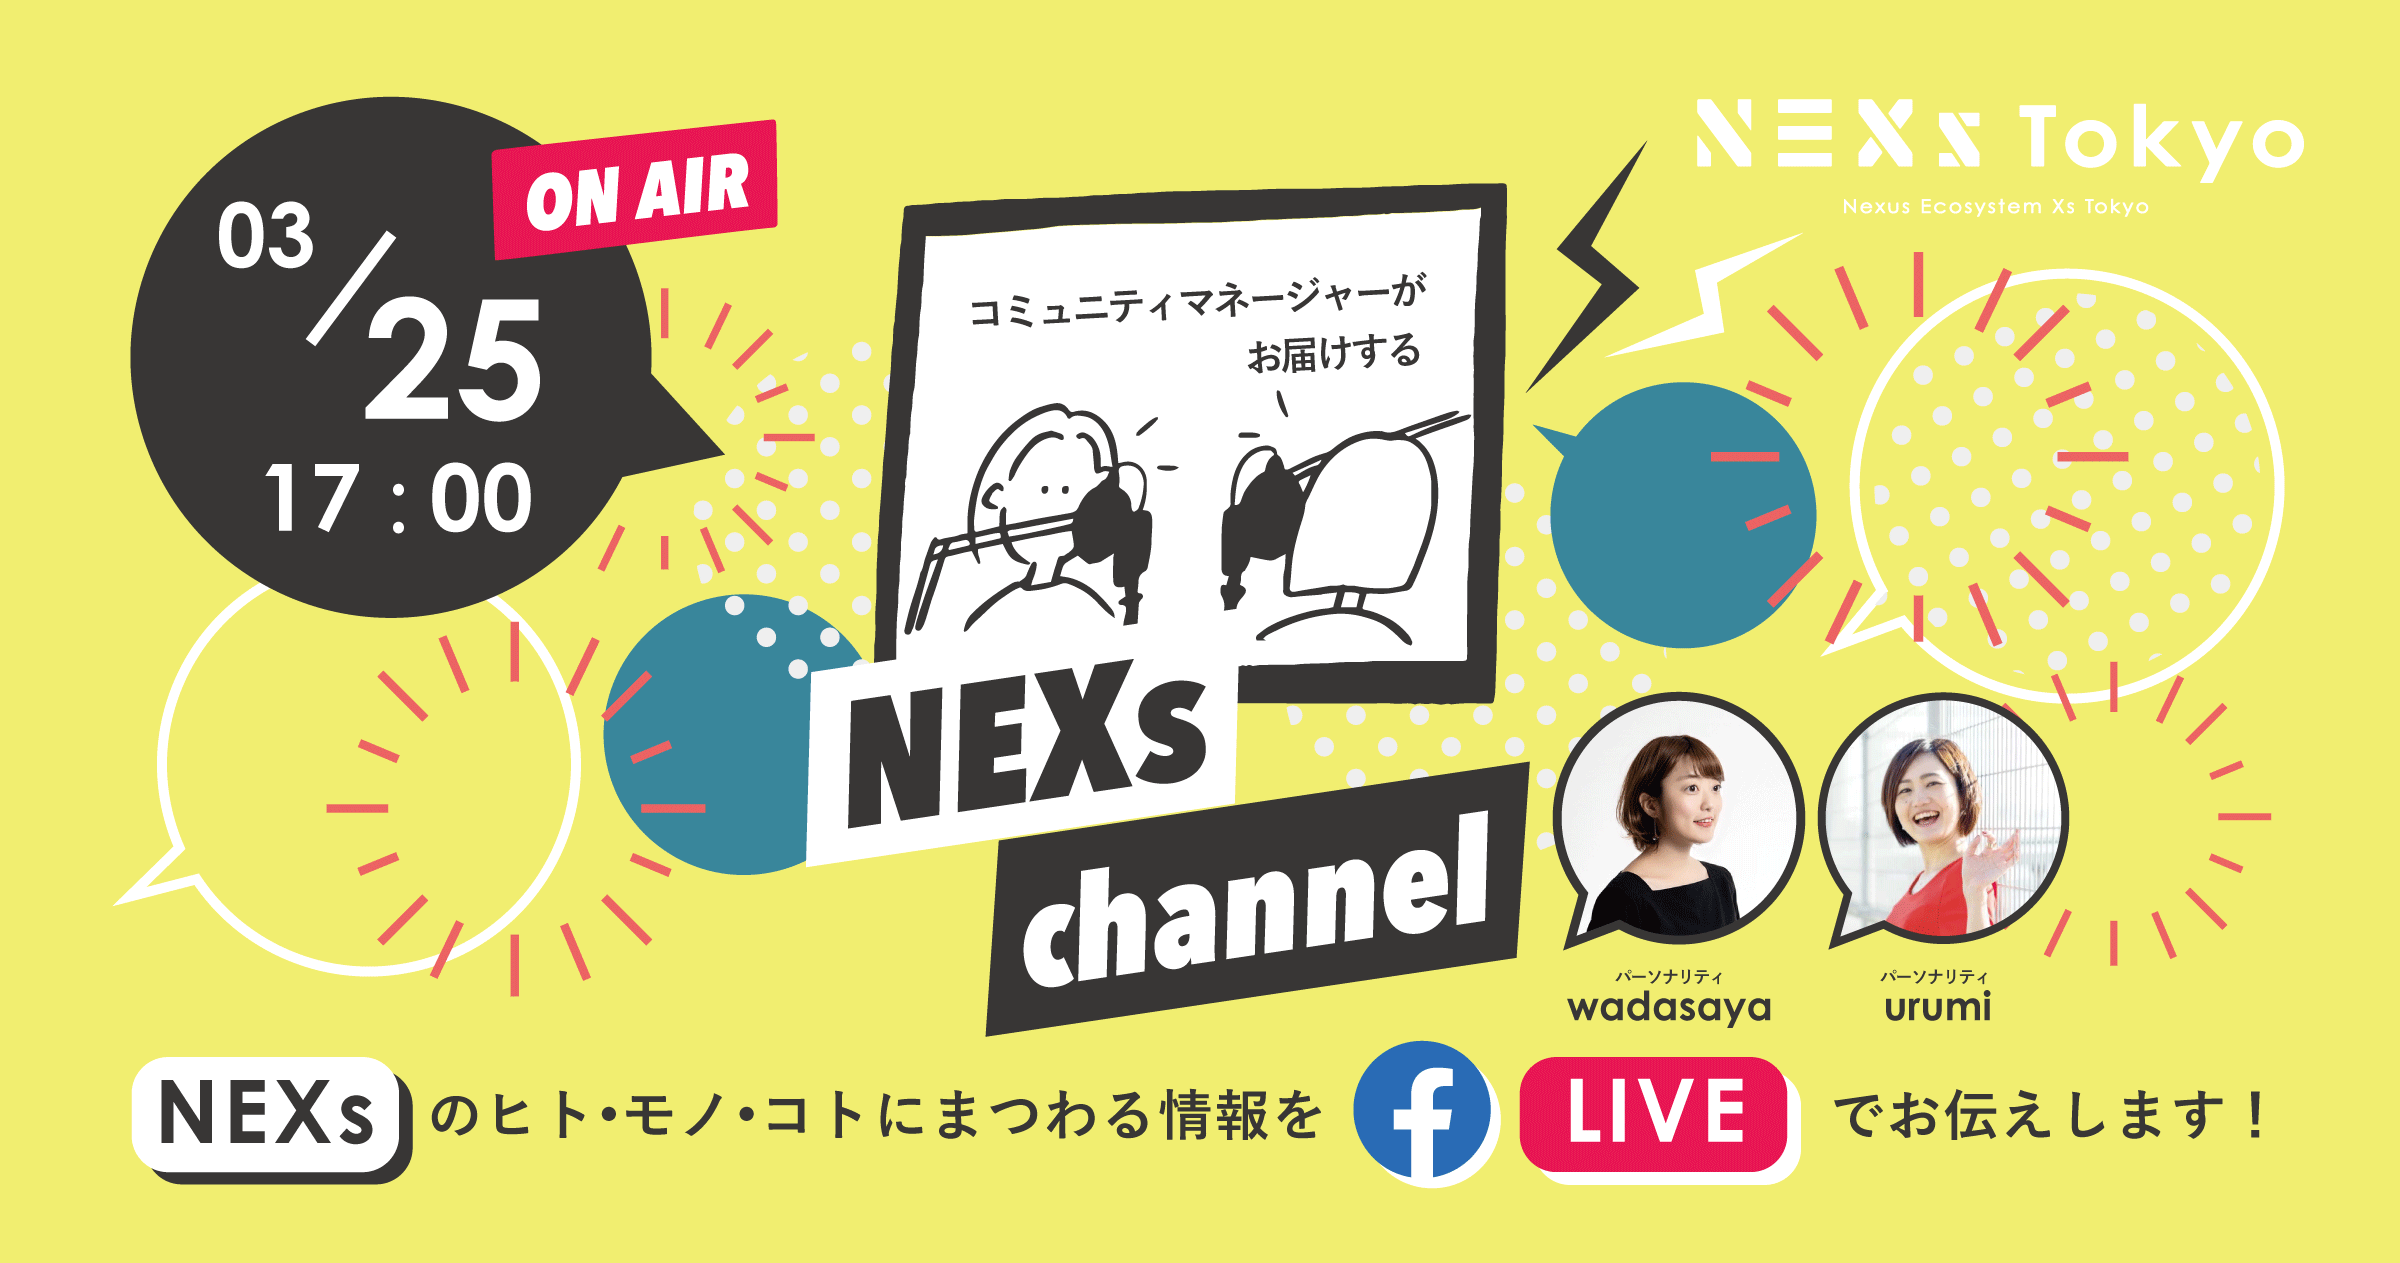 NEXs channel #3-NEXsTokyoのヒト・モノ・コトを特設ラジオブースから生放送でお届け！-